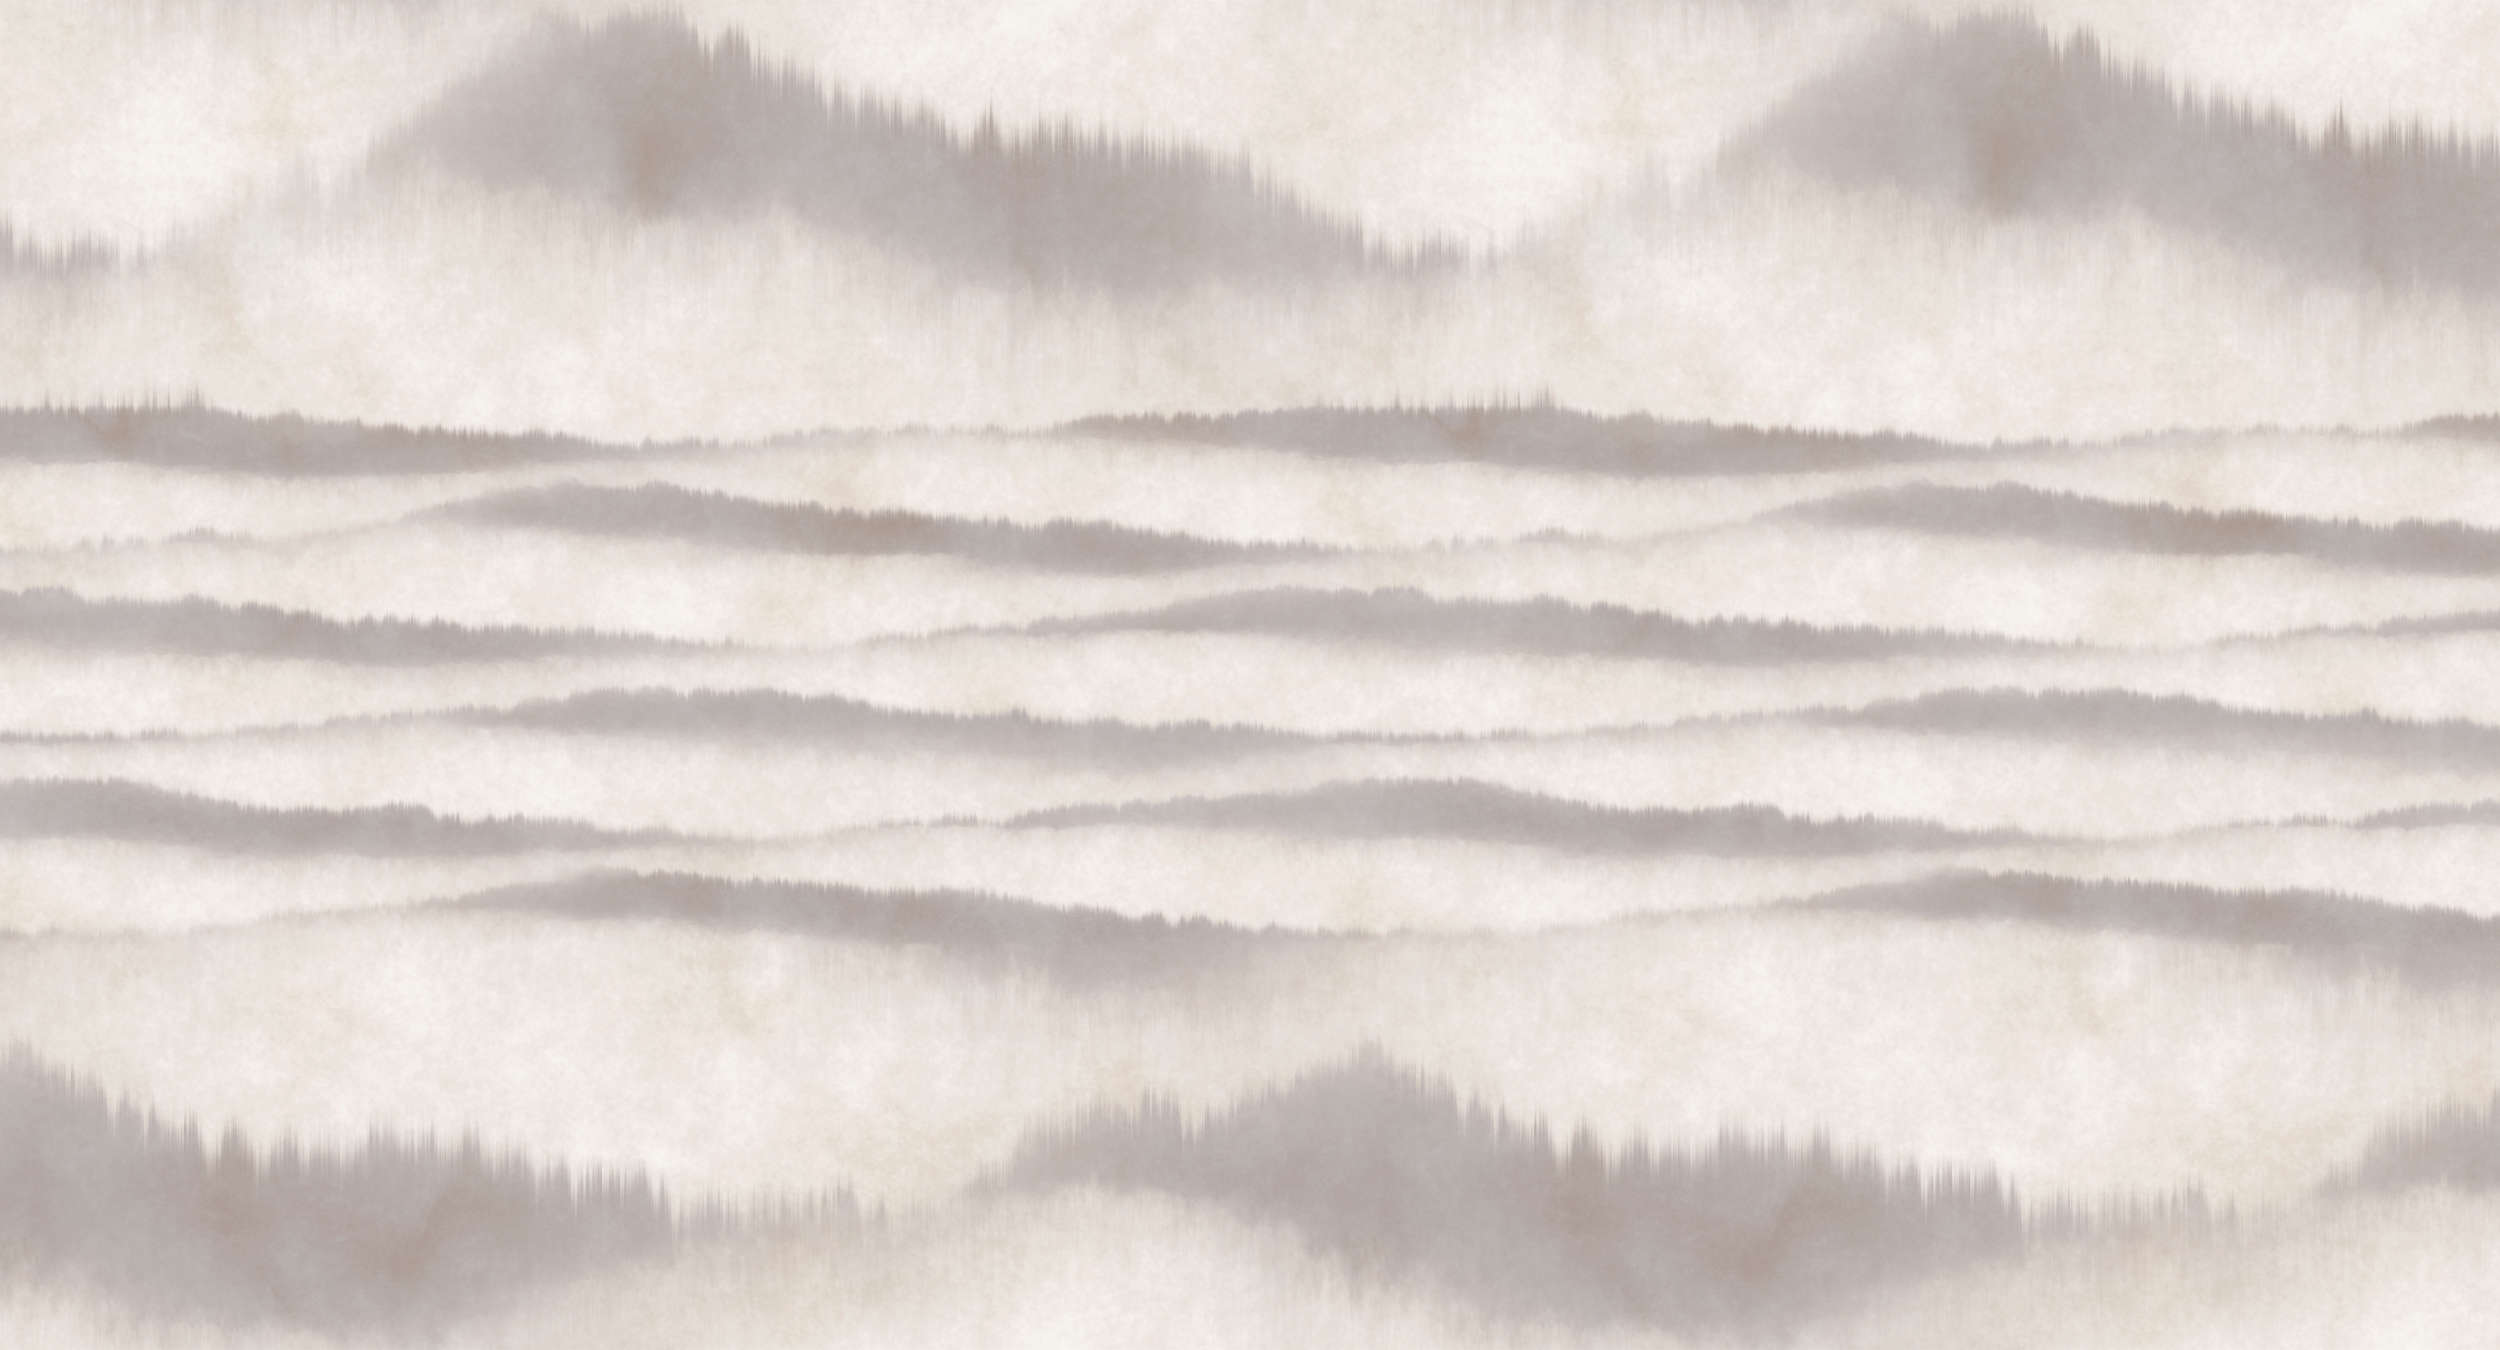             Fototapete abstraktes Muster Wellen – Weiß, Grau
        